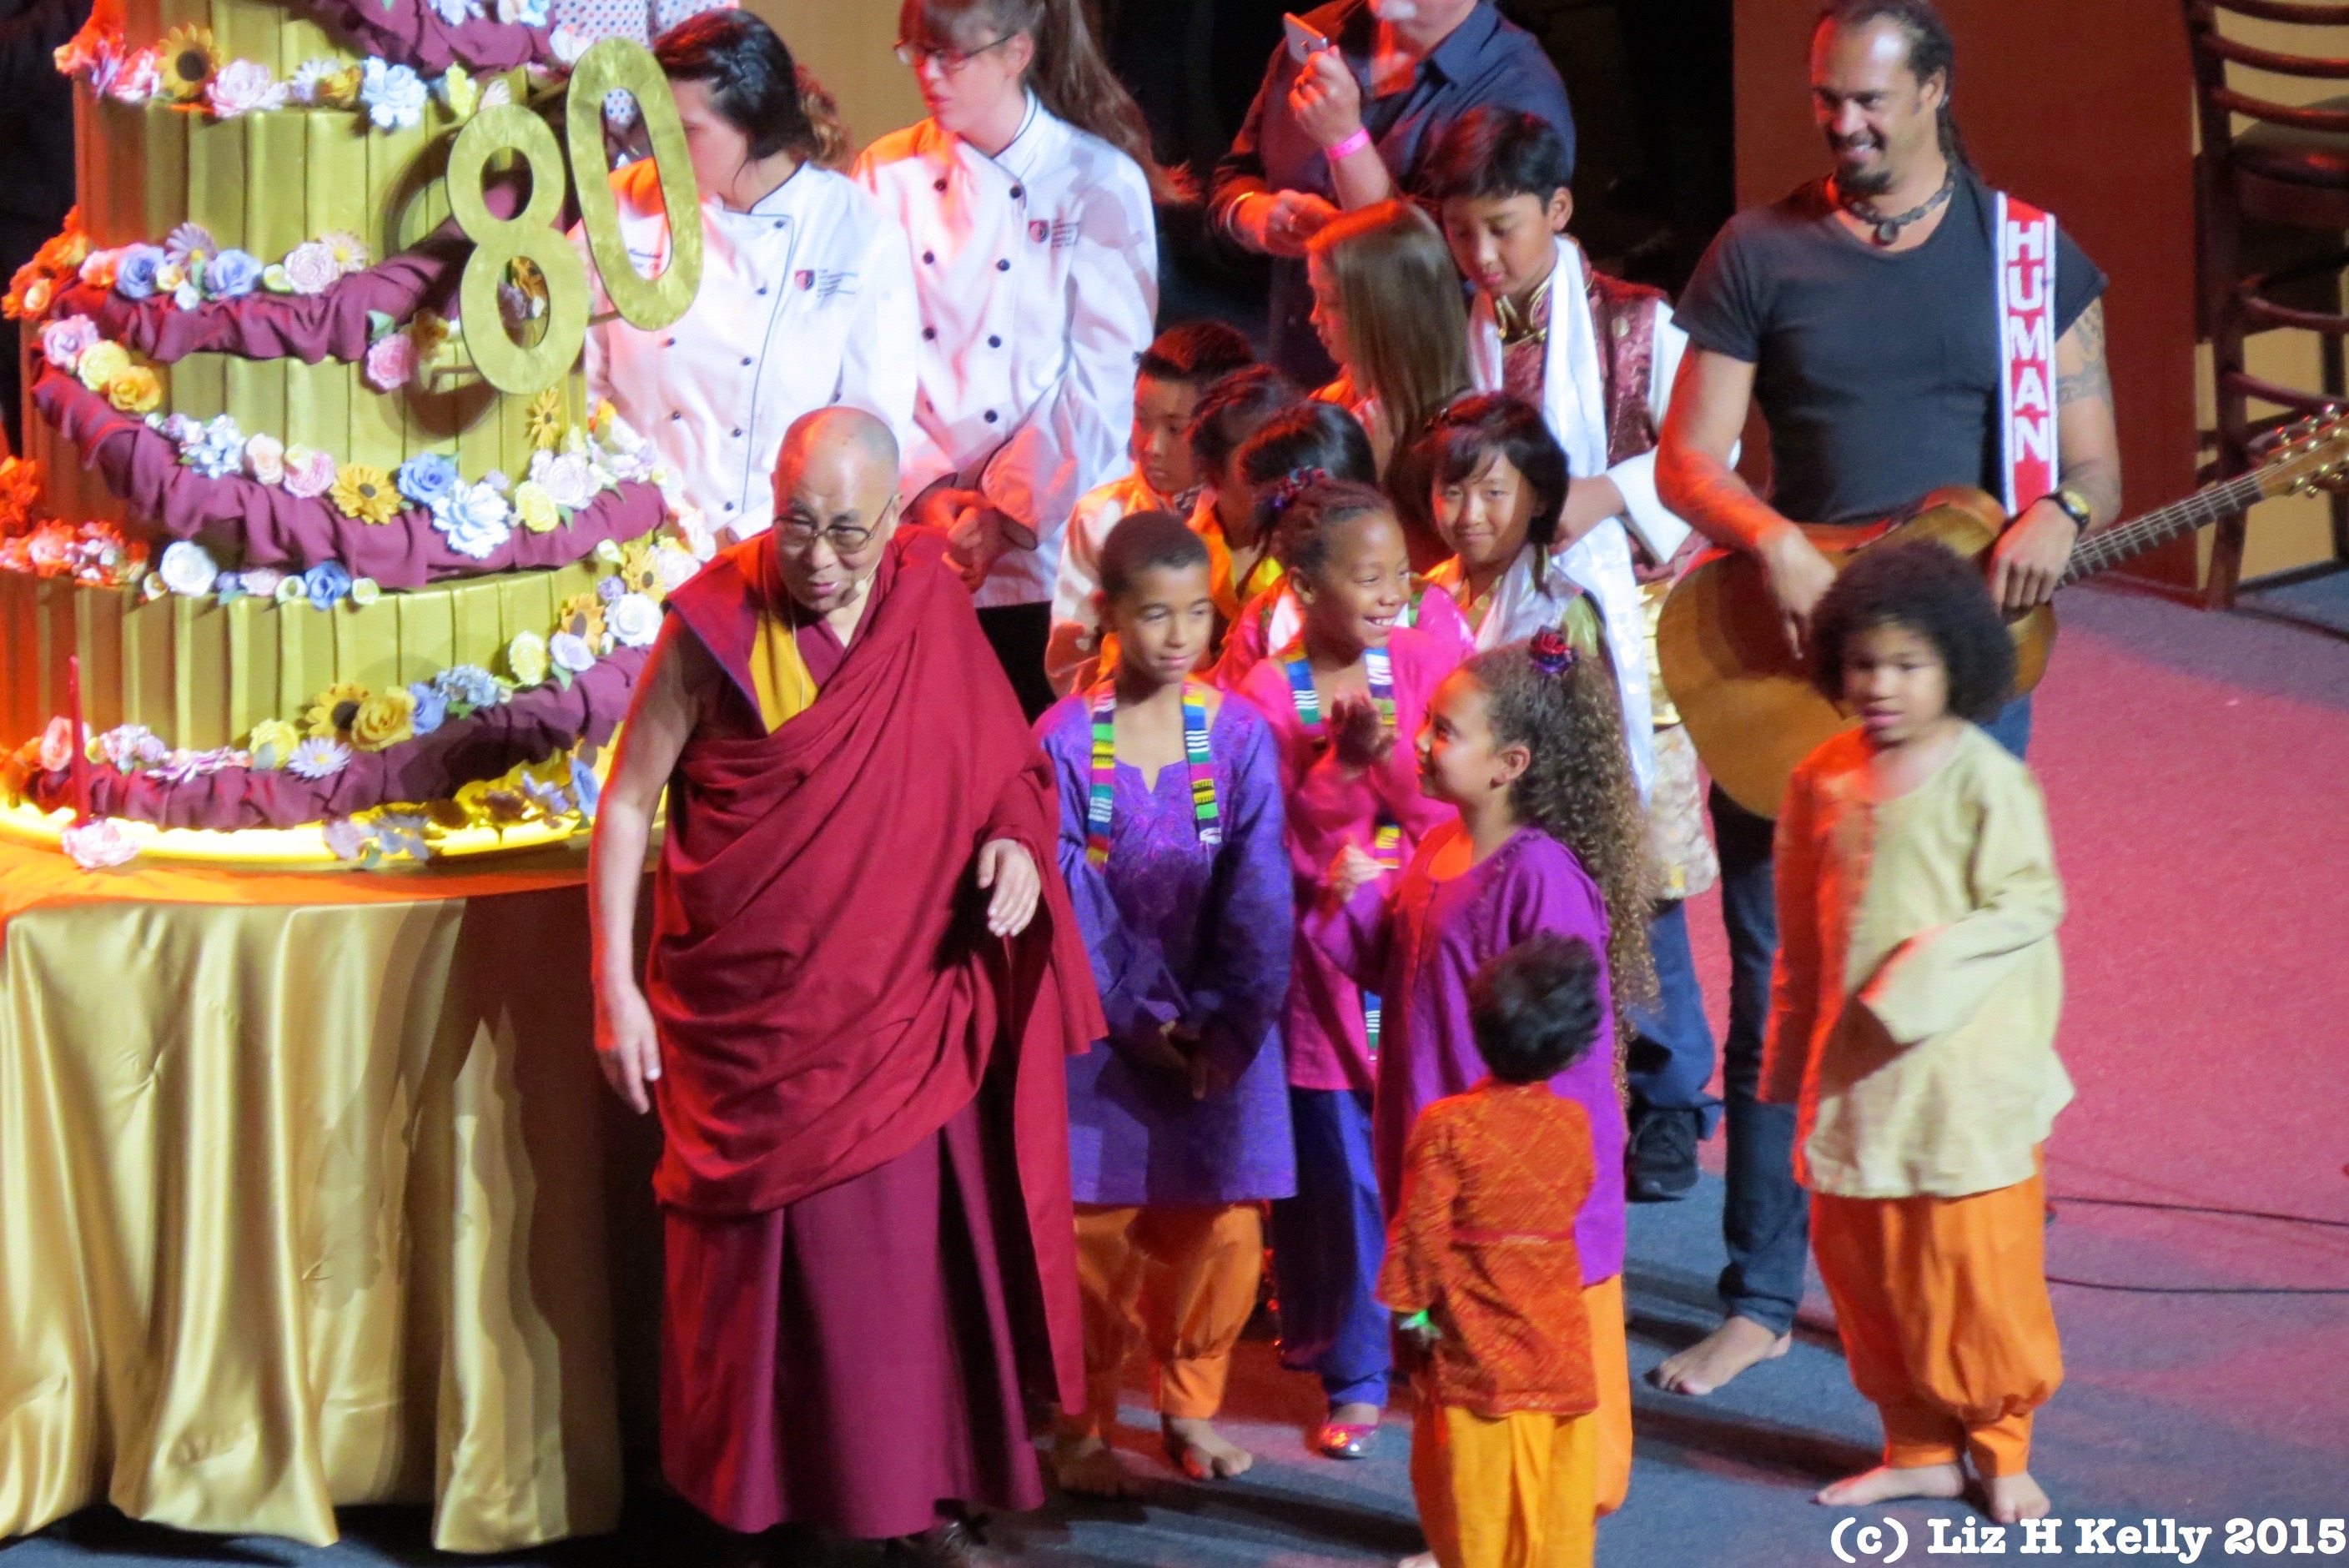 4 Videos from His Holiness Dalai Lama 80th Birthday Celebration